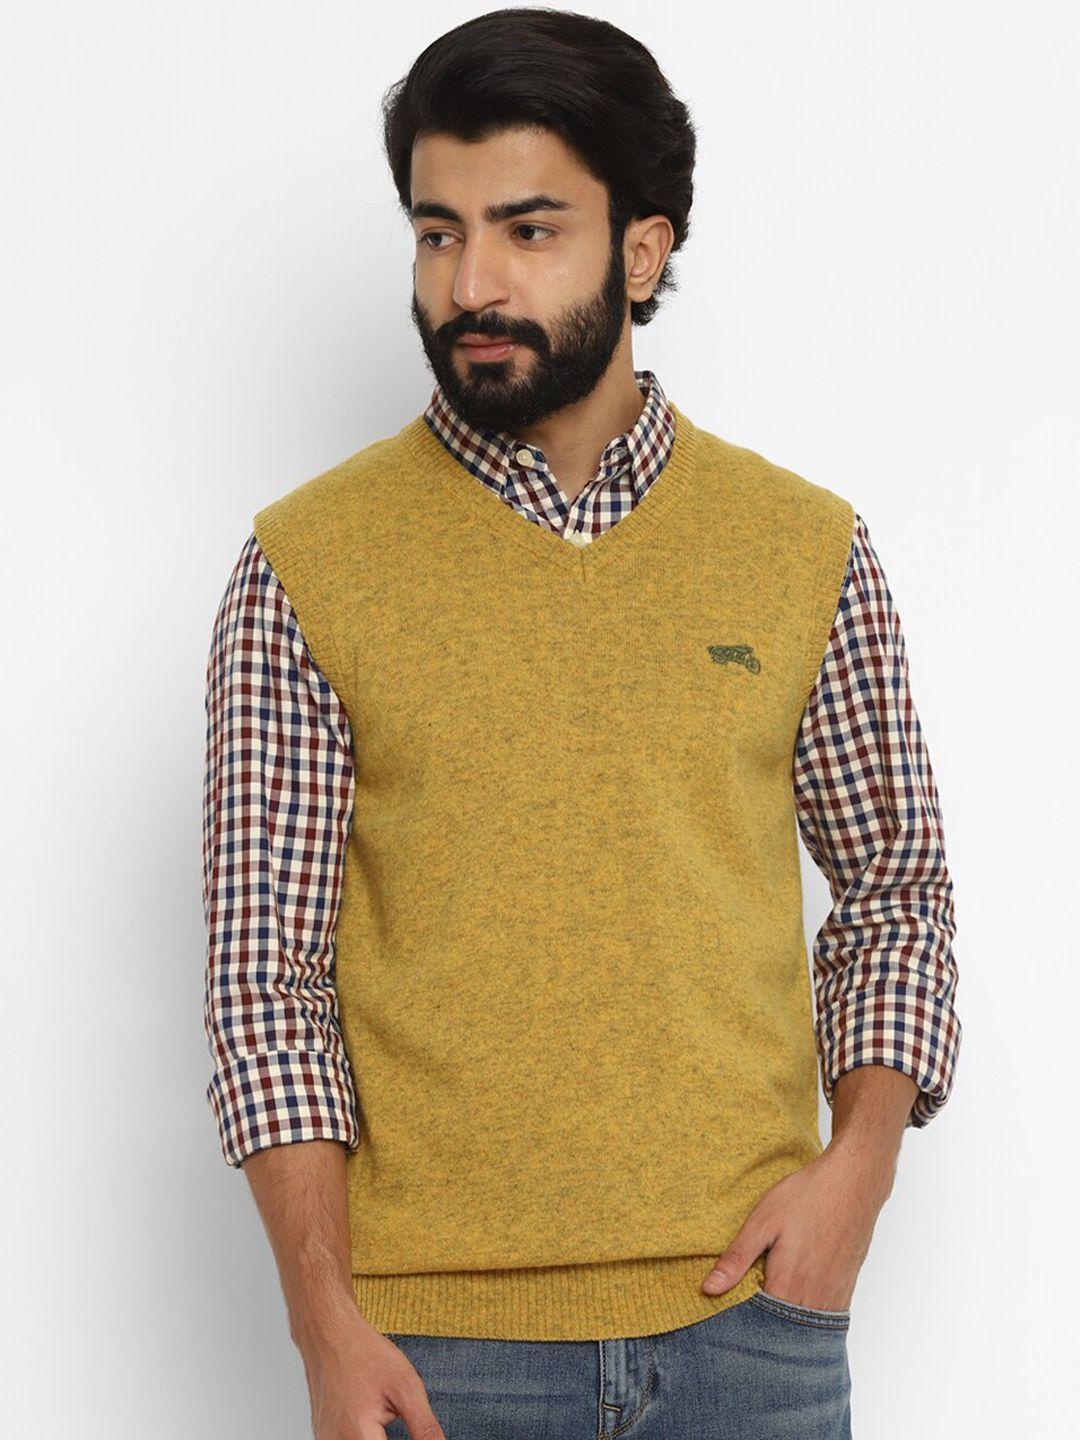 royal-enfield-men-yellow-solid-v-neck-sweater-vest